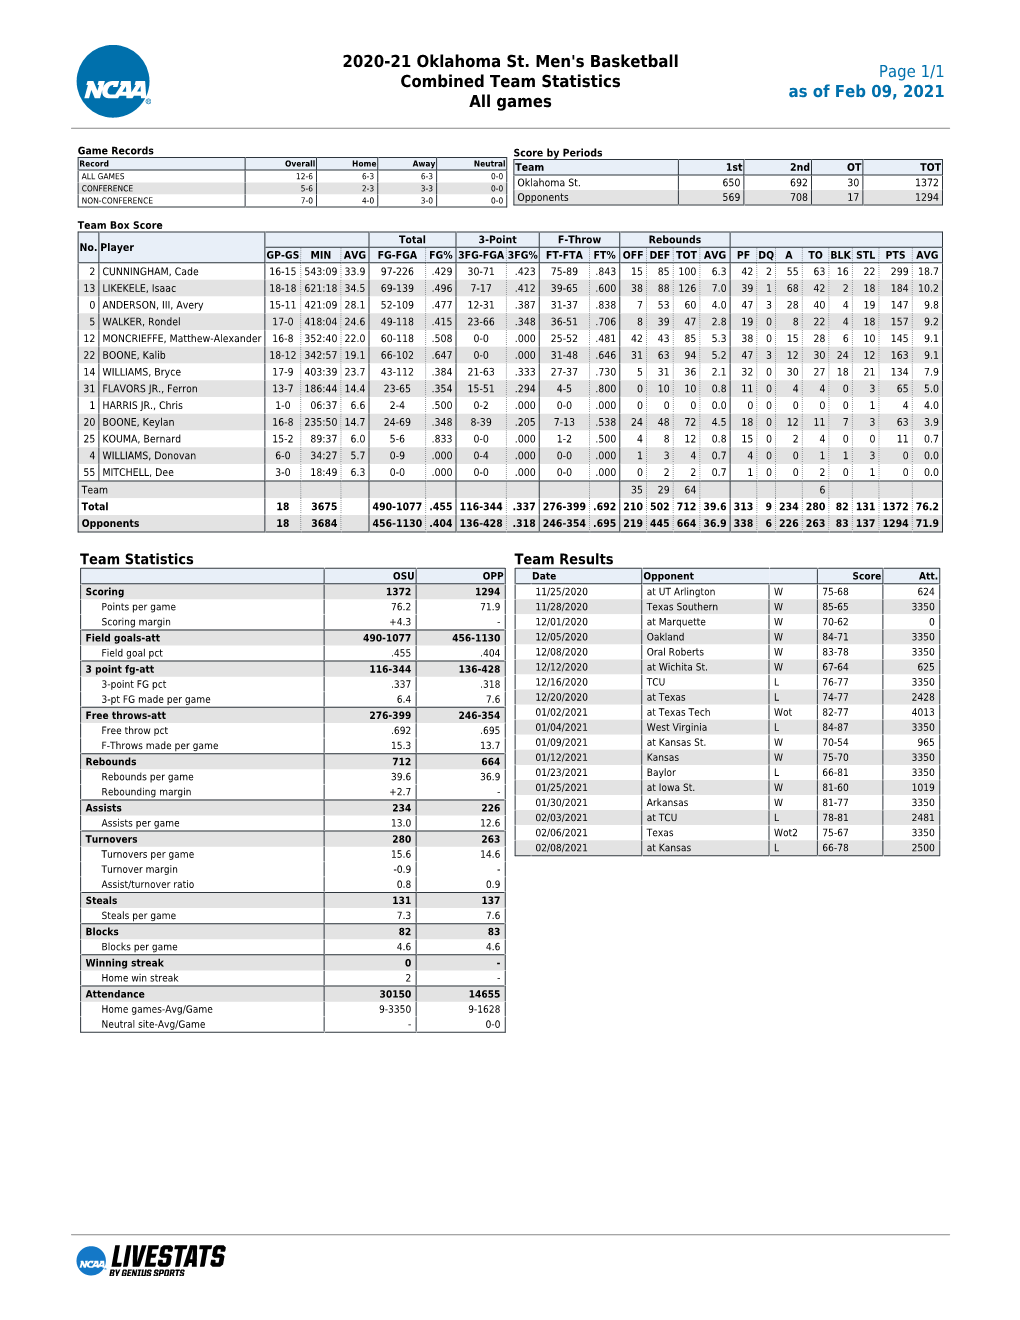 2020-21 Oklahoma St. Men's Basketball Combined Team Statistics